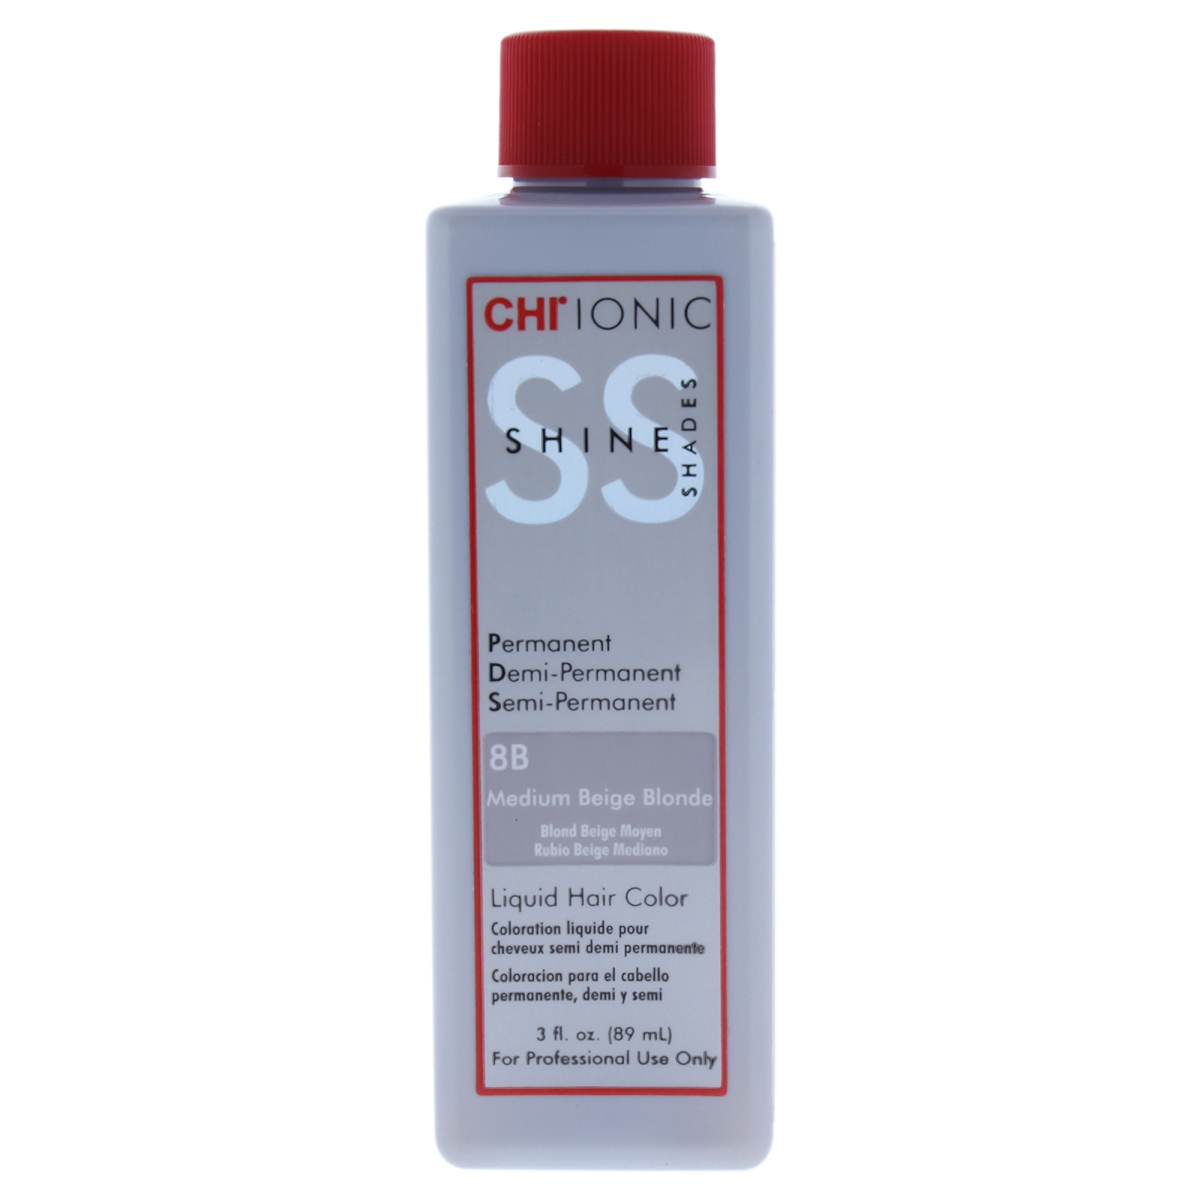 I0084043 Ionic Shine Shades Liquid Hair Color For Unisex - 8b Medium Beige Blonde - 3 Oz